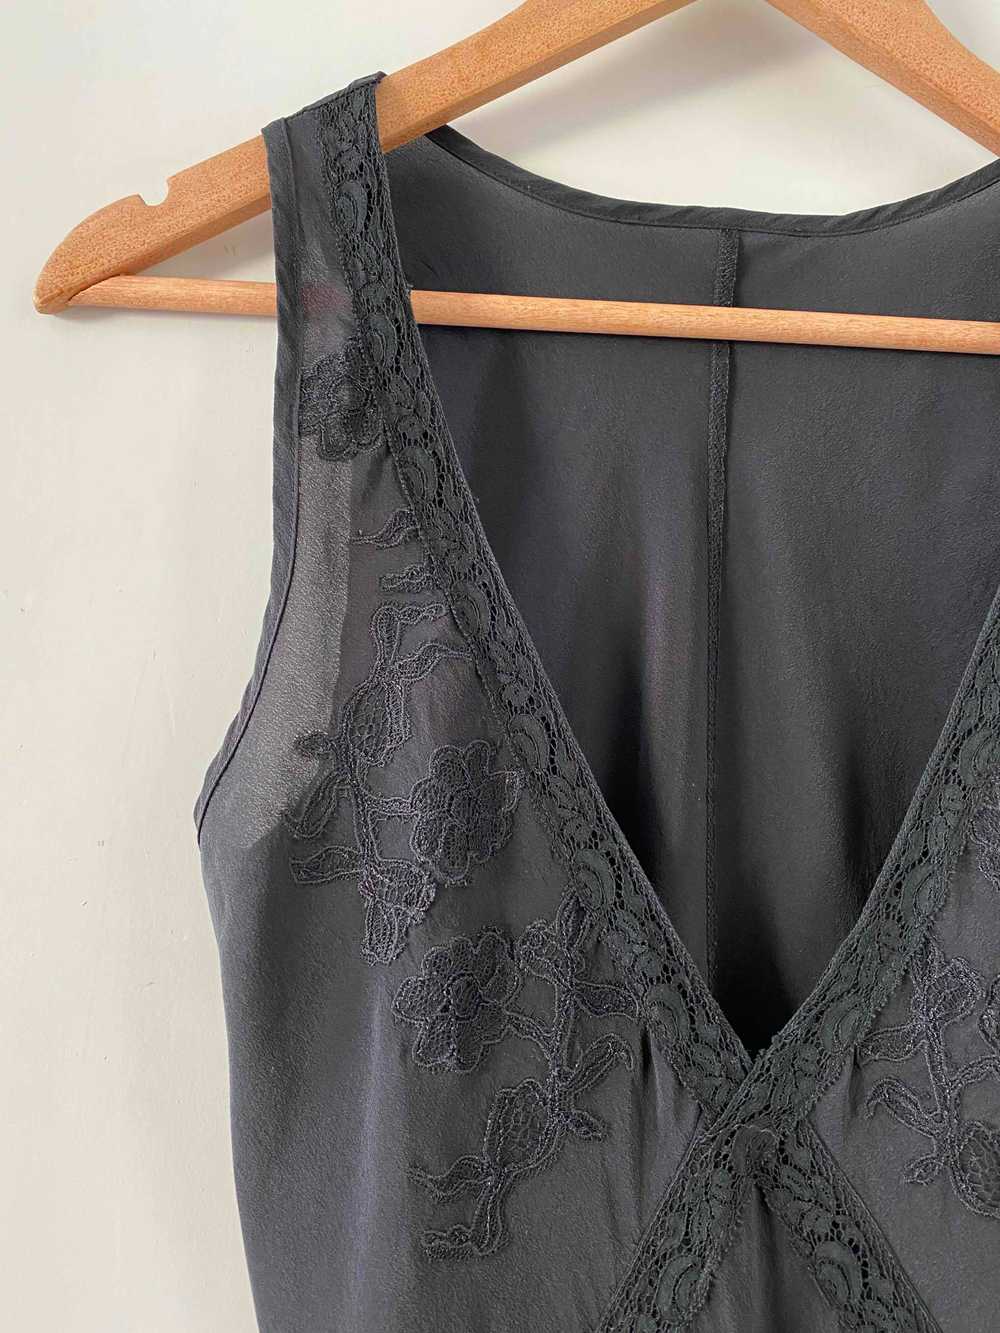 Silk slip dress - Silk slip dress, 100% black sil… - image 8